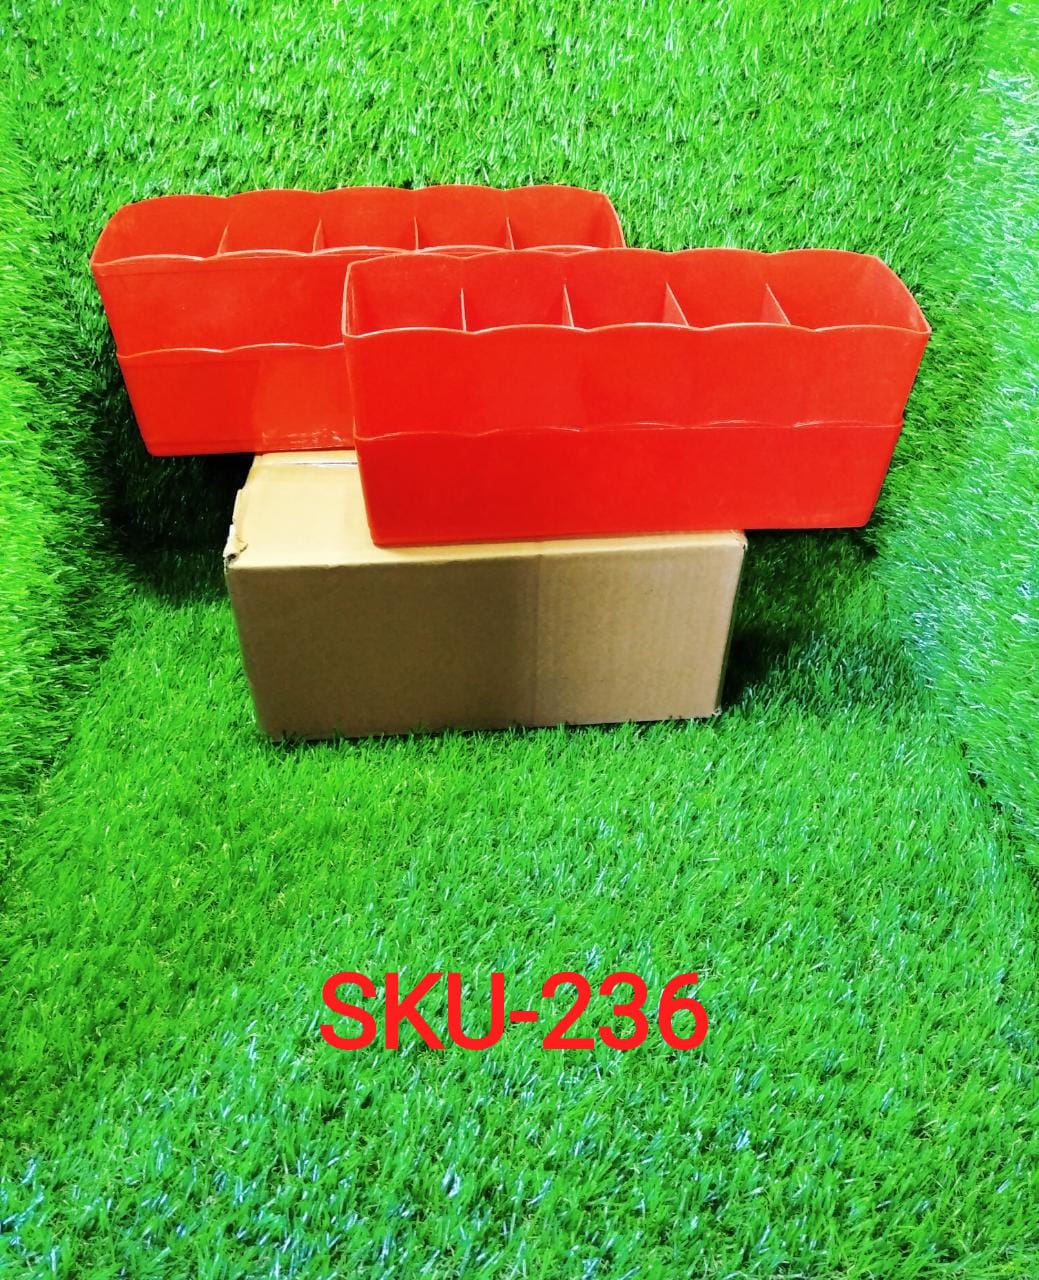 236 5-Compartments Socks/Handkerchief/Underwear Storage Box Socks Drawer Closet Organizer Storage Boxes (pack of 4) DeoDap